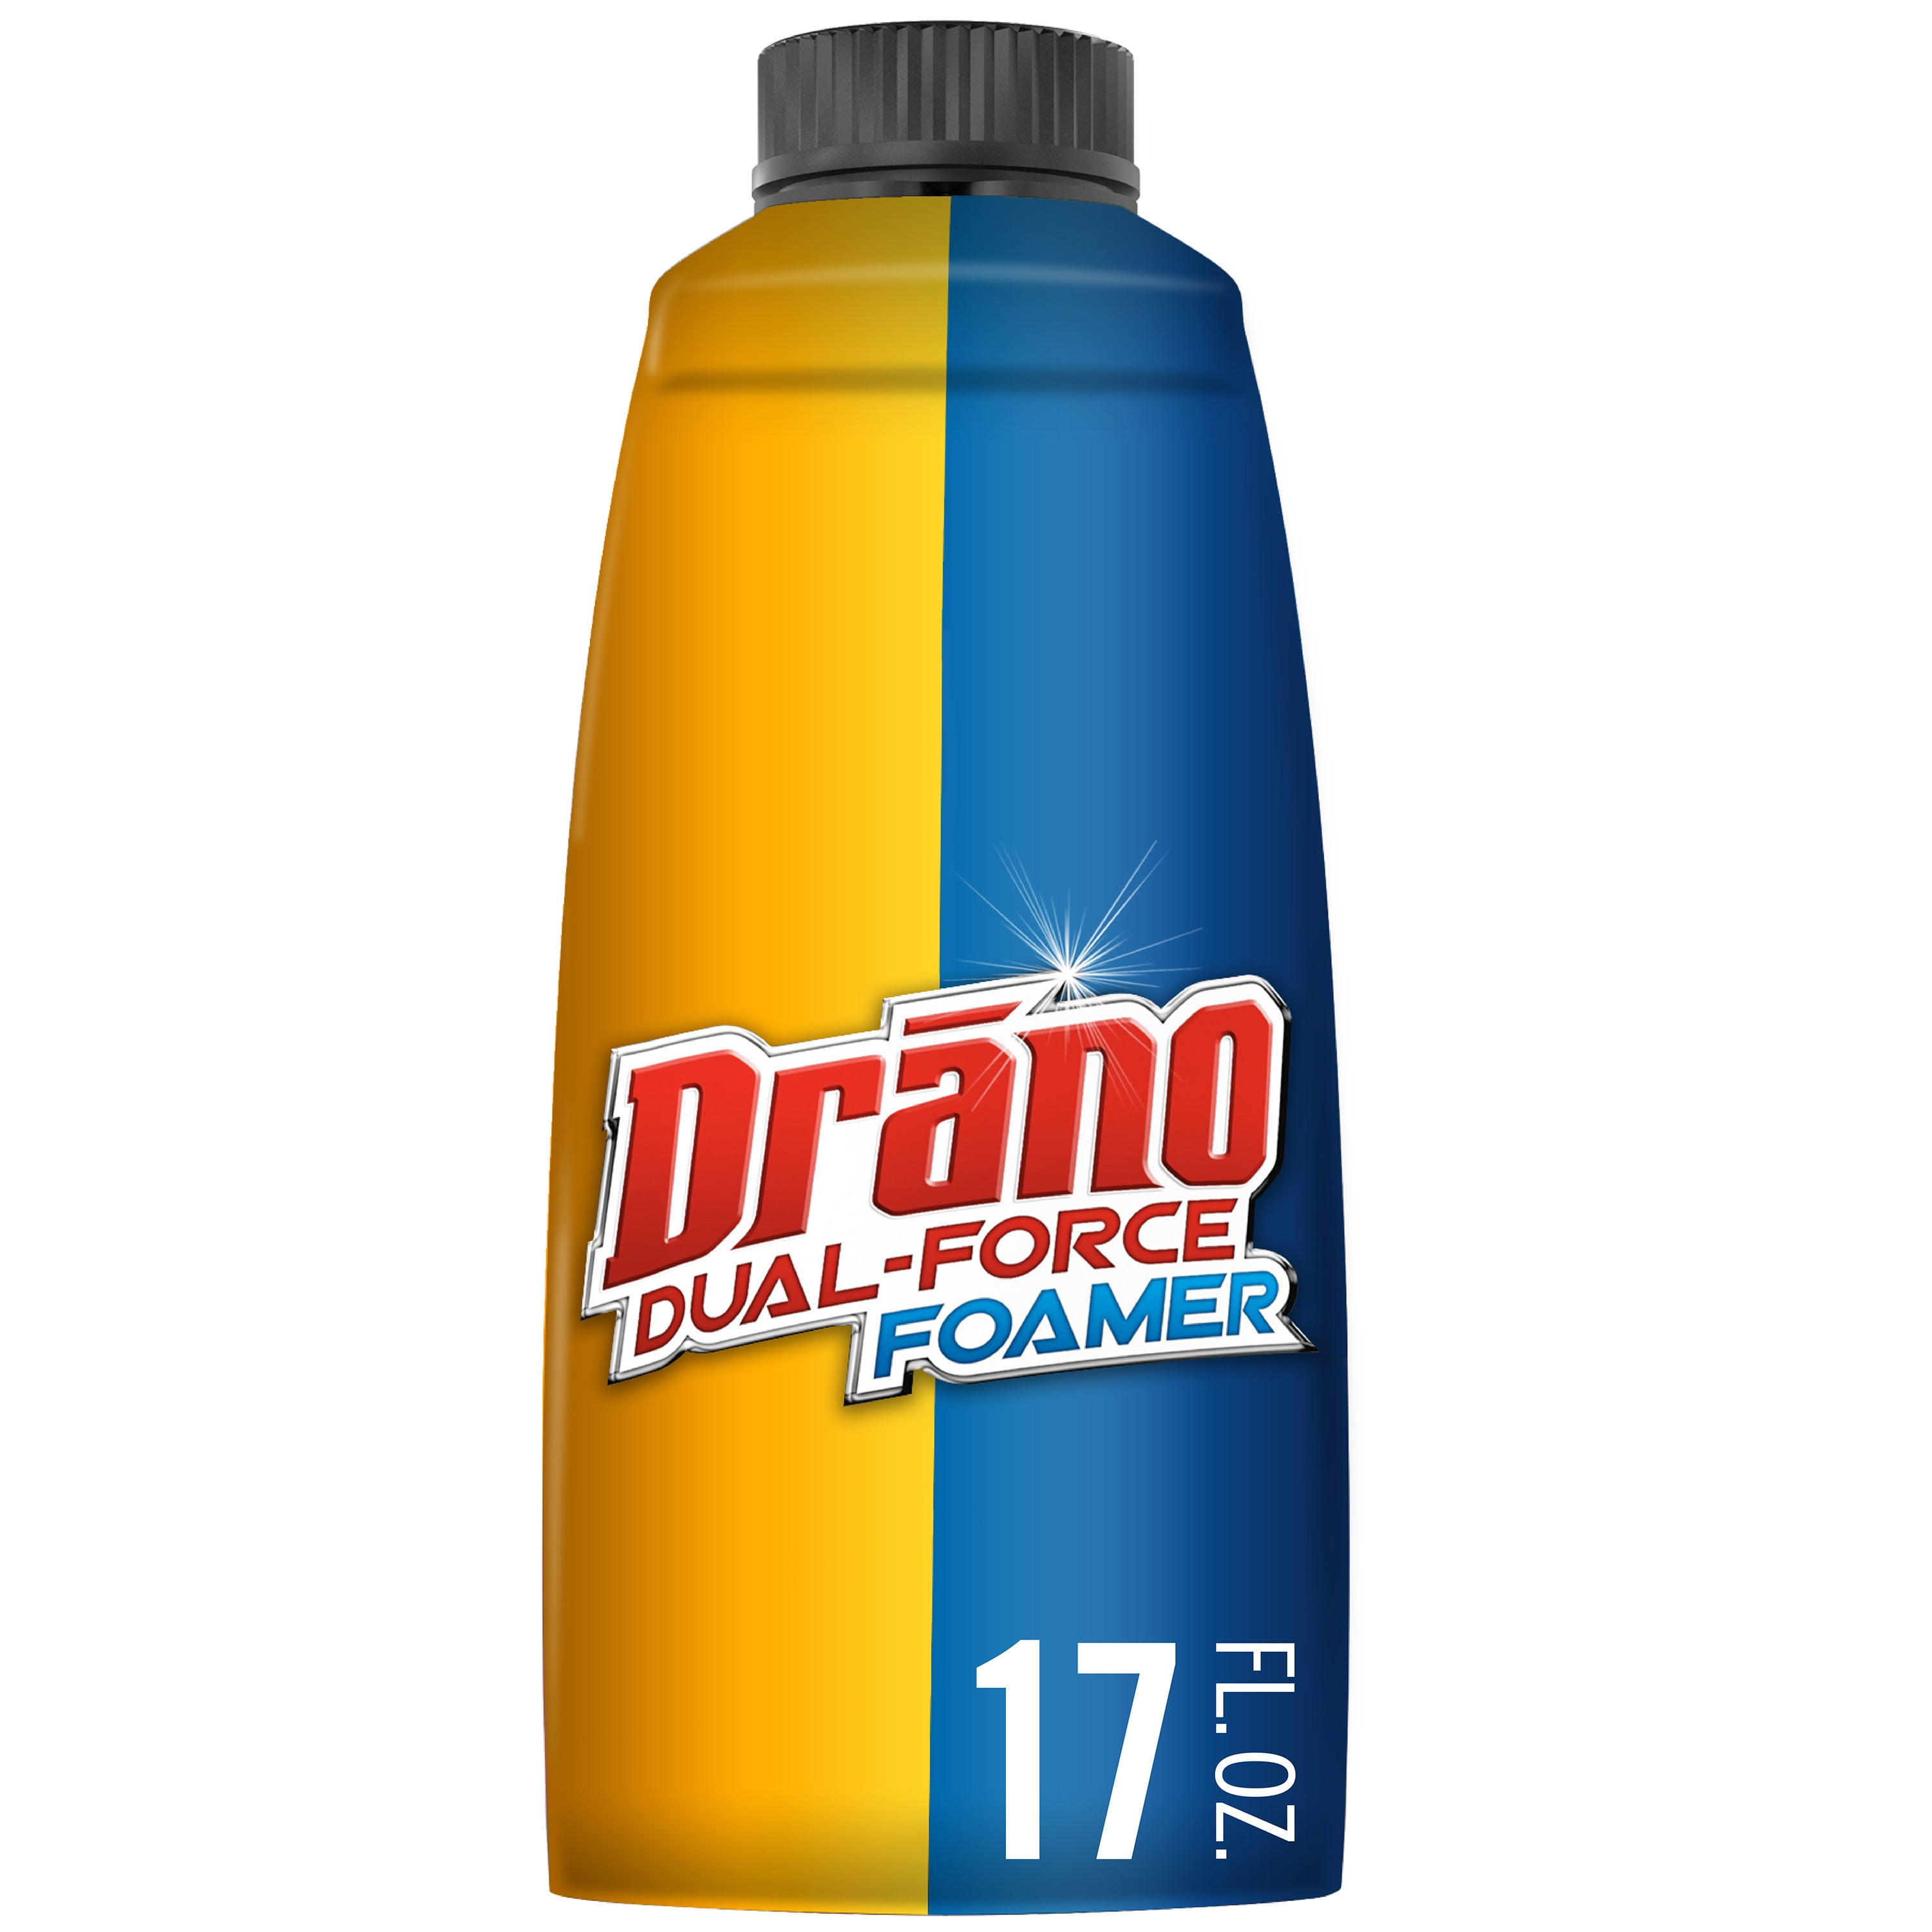 Drano Balance Drain Cleaner, 32 Fl Oz (946 mL)